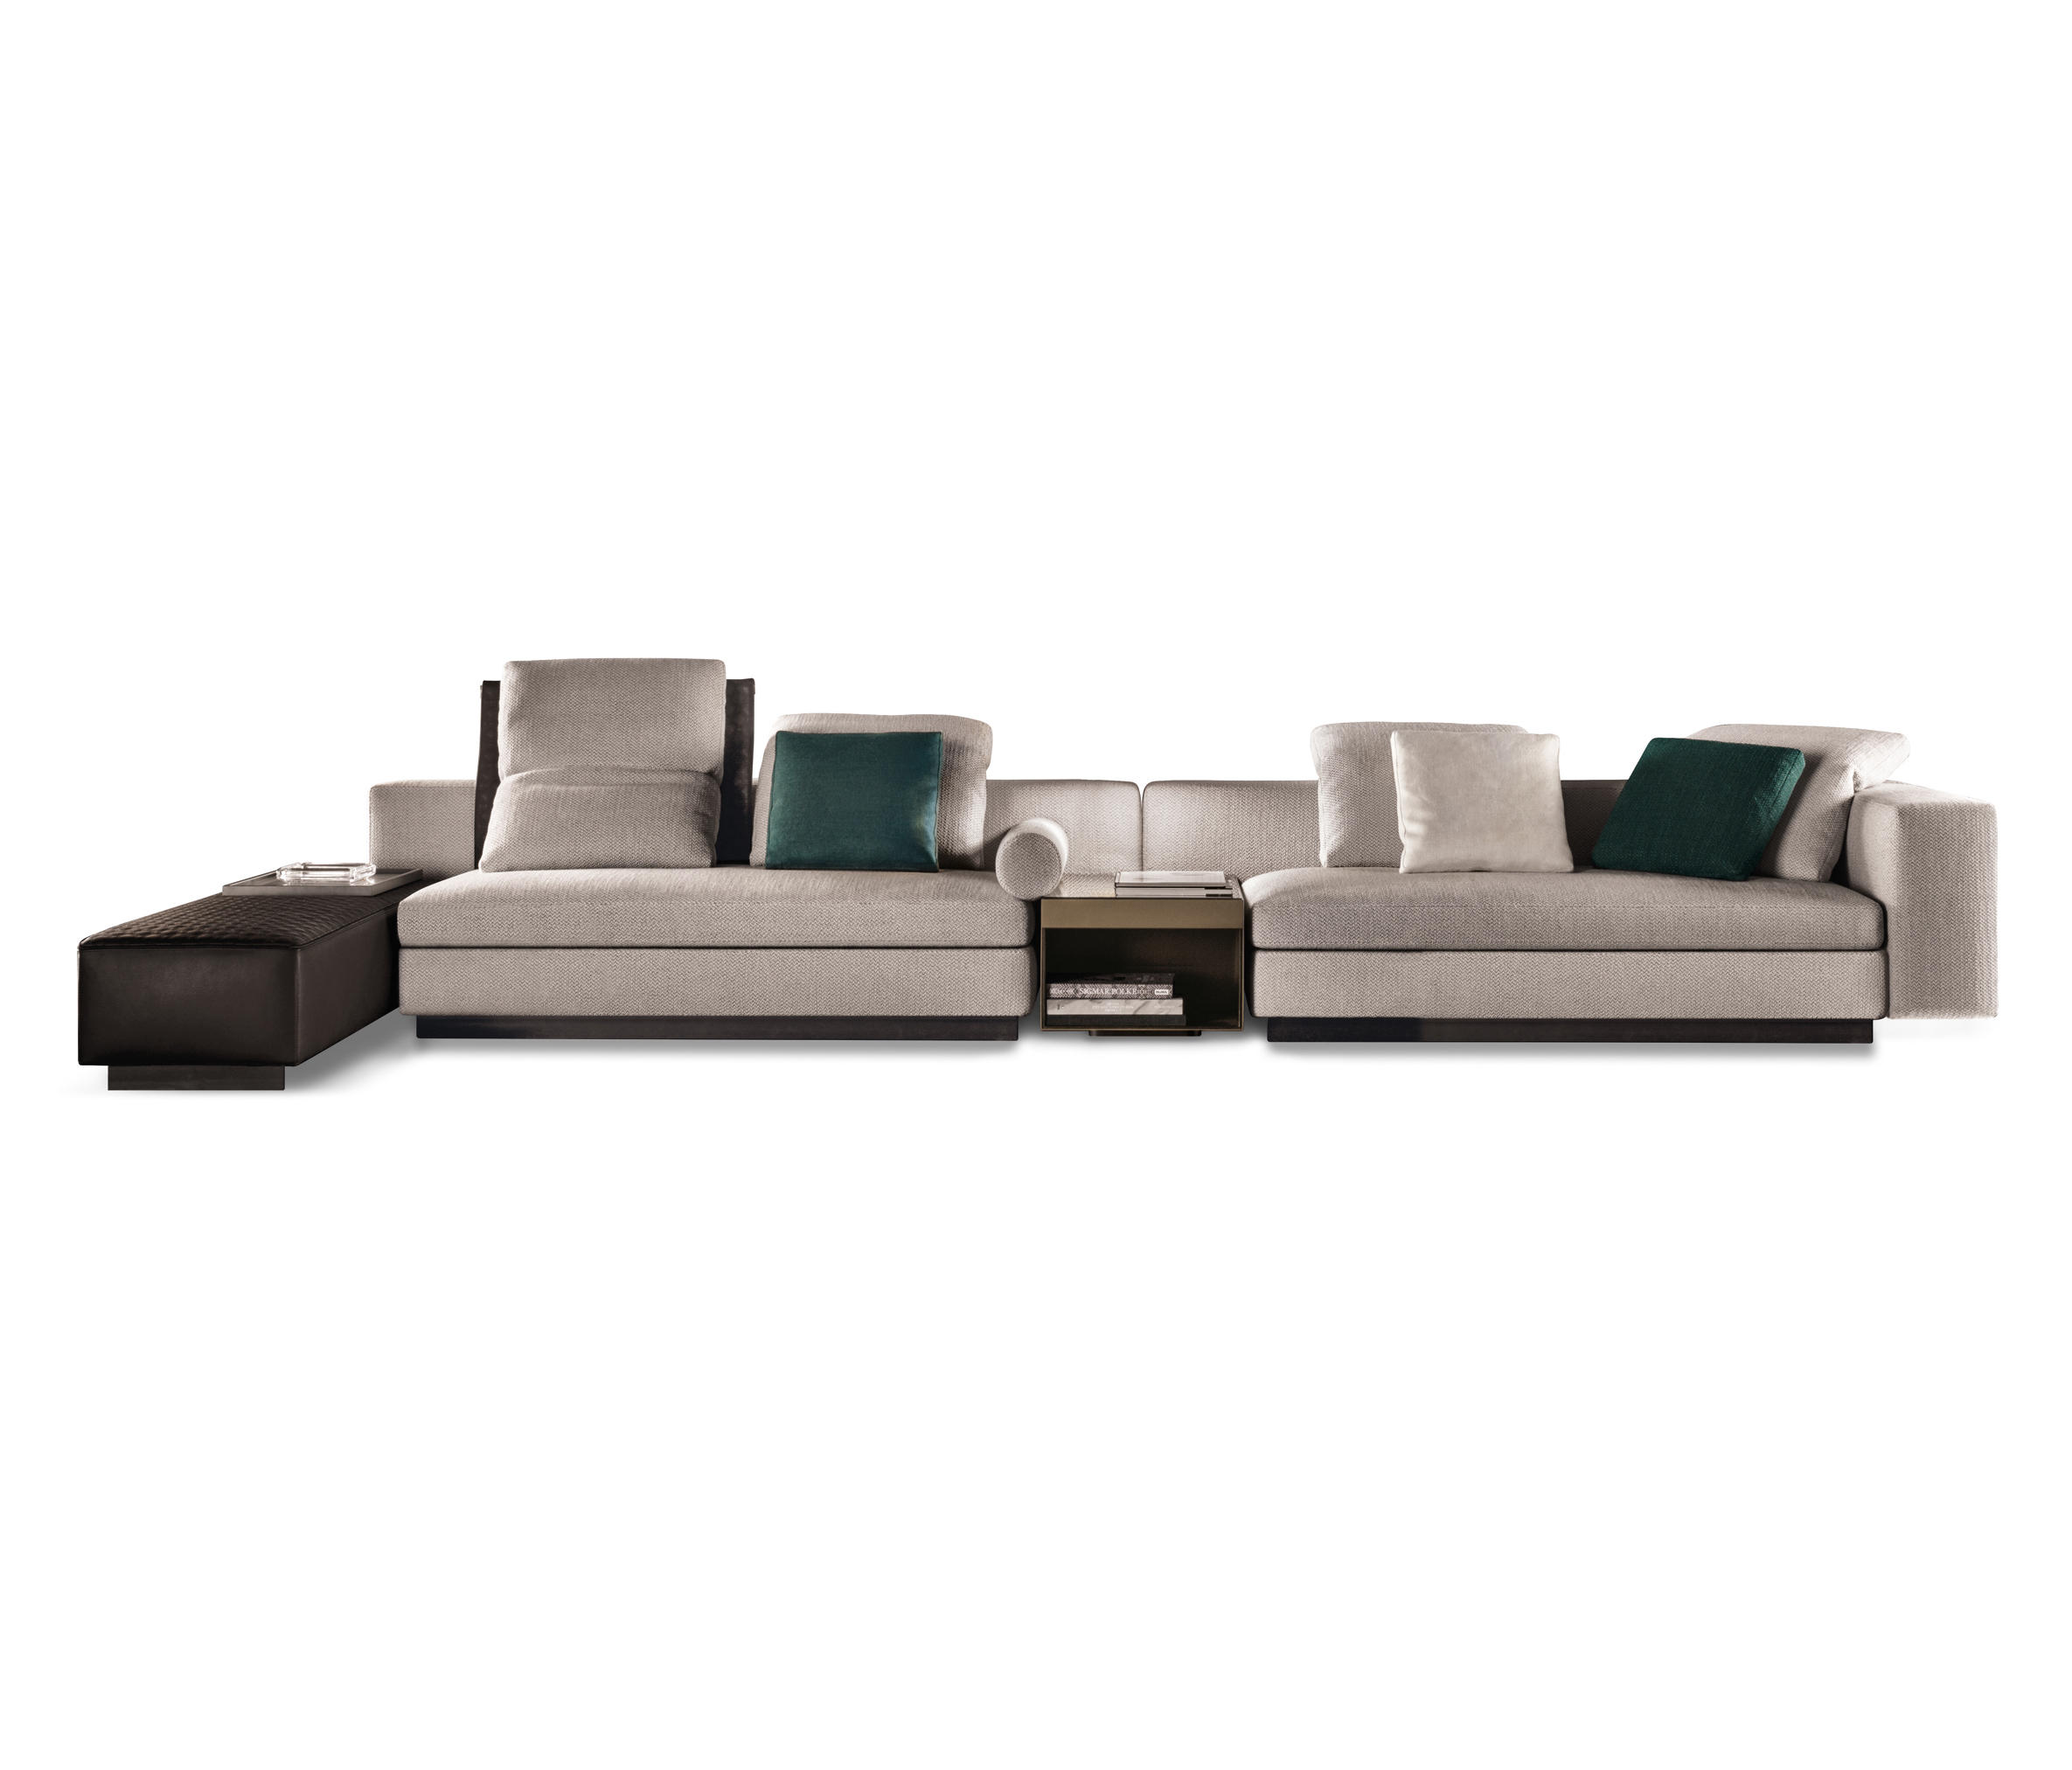 YANG Modular sofa systems from Minotti